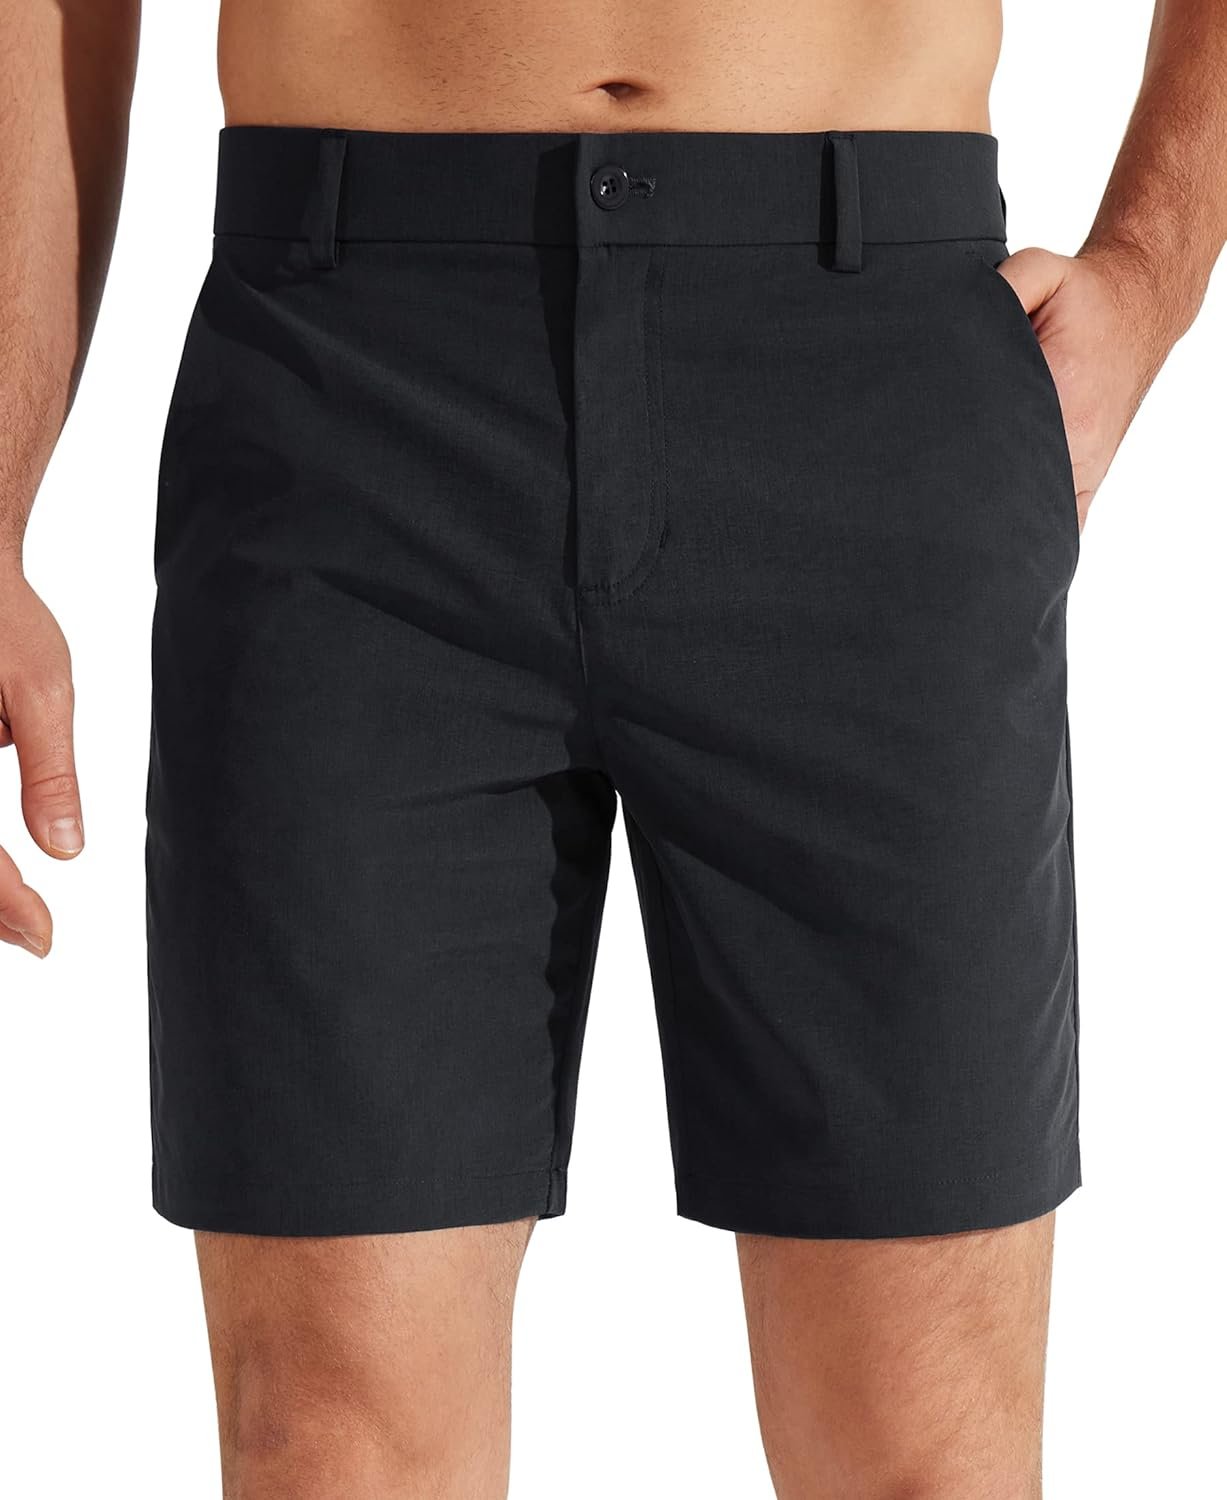 Libin Mens Golf Shorts 7 10 Work Dress Shorts Casual Flat Front Hybrid Shorts Lightweight Quick Dry